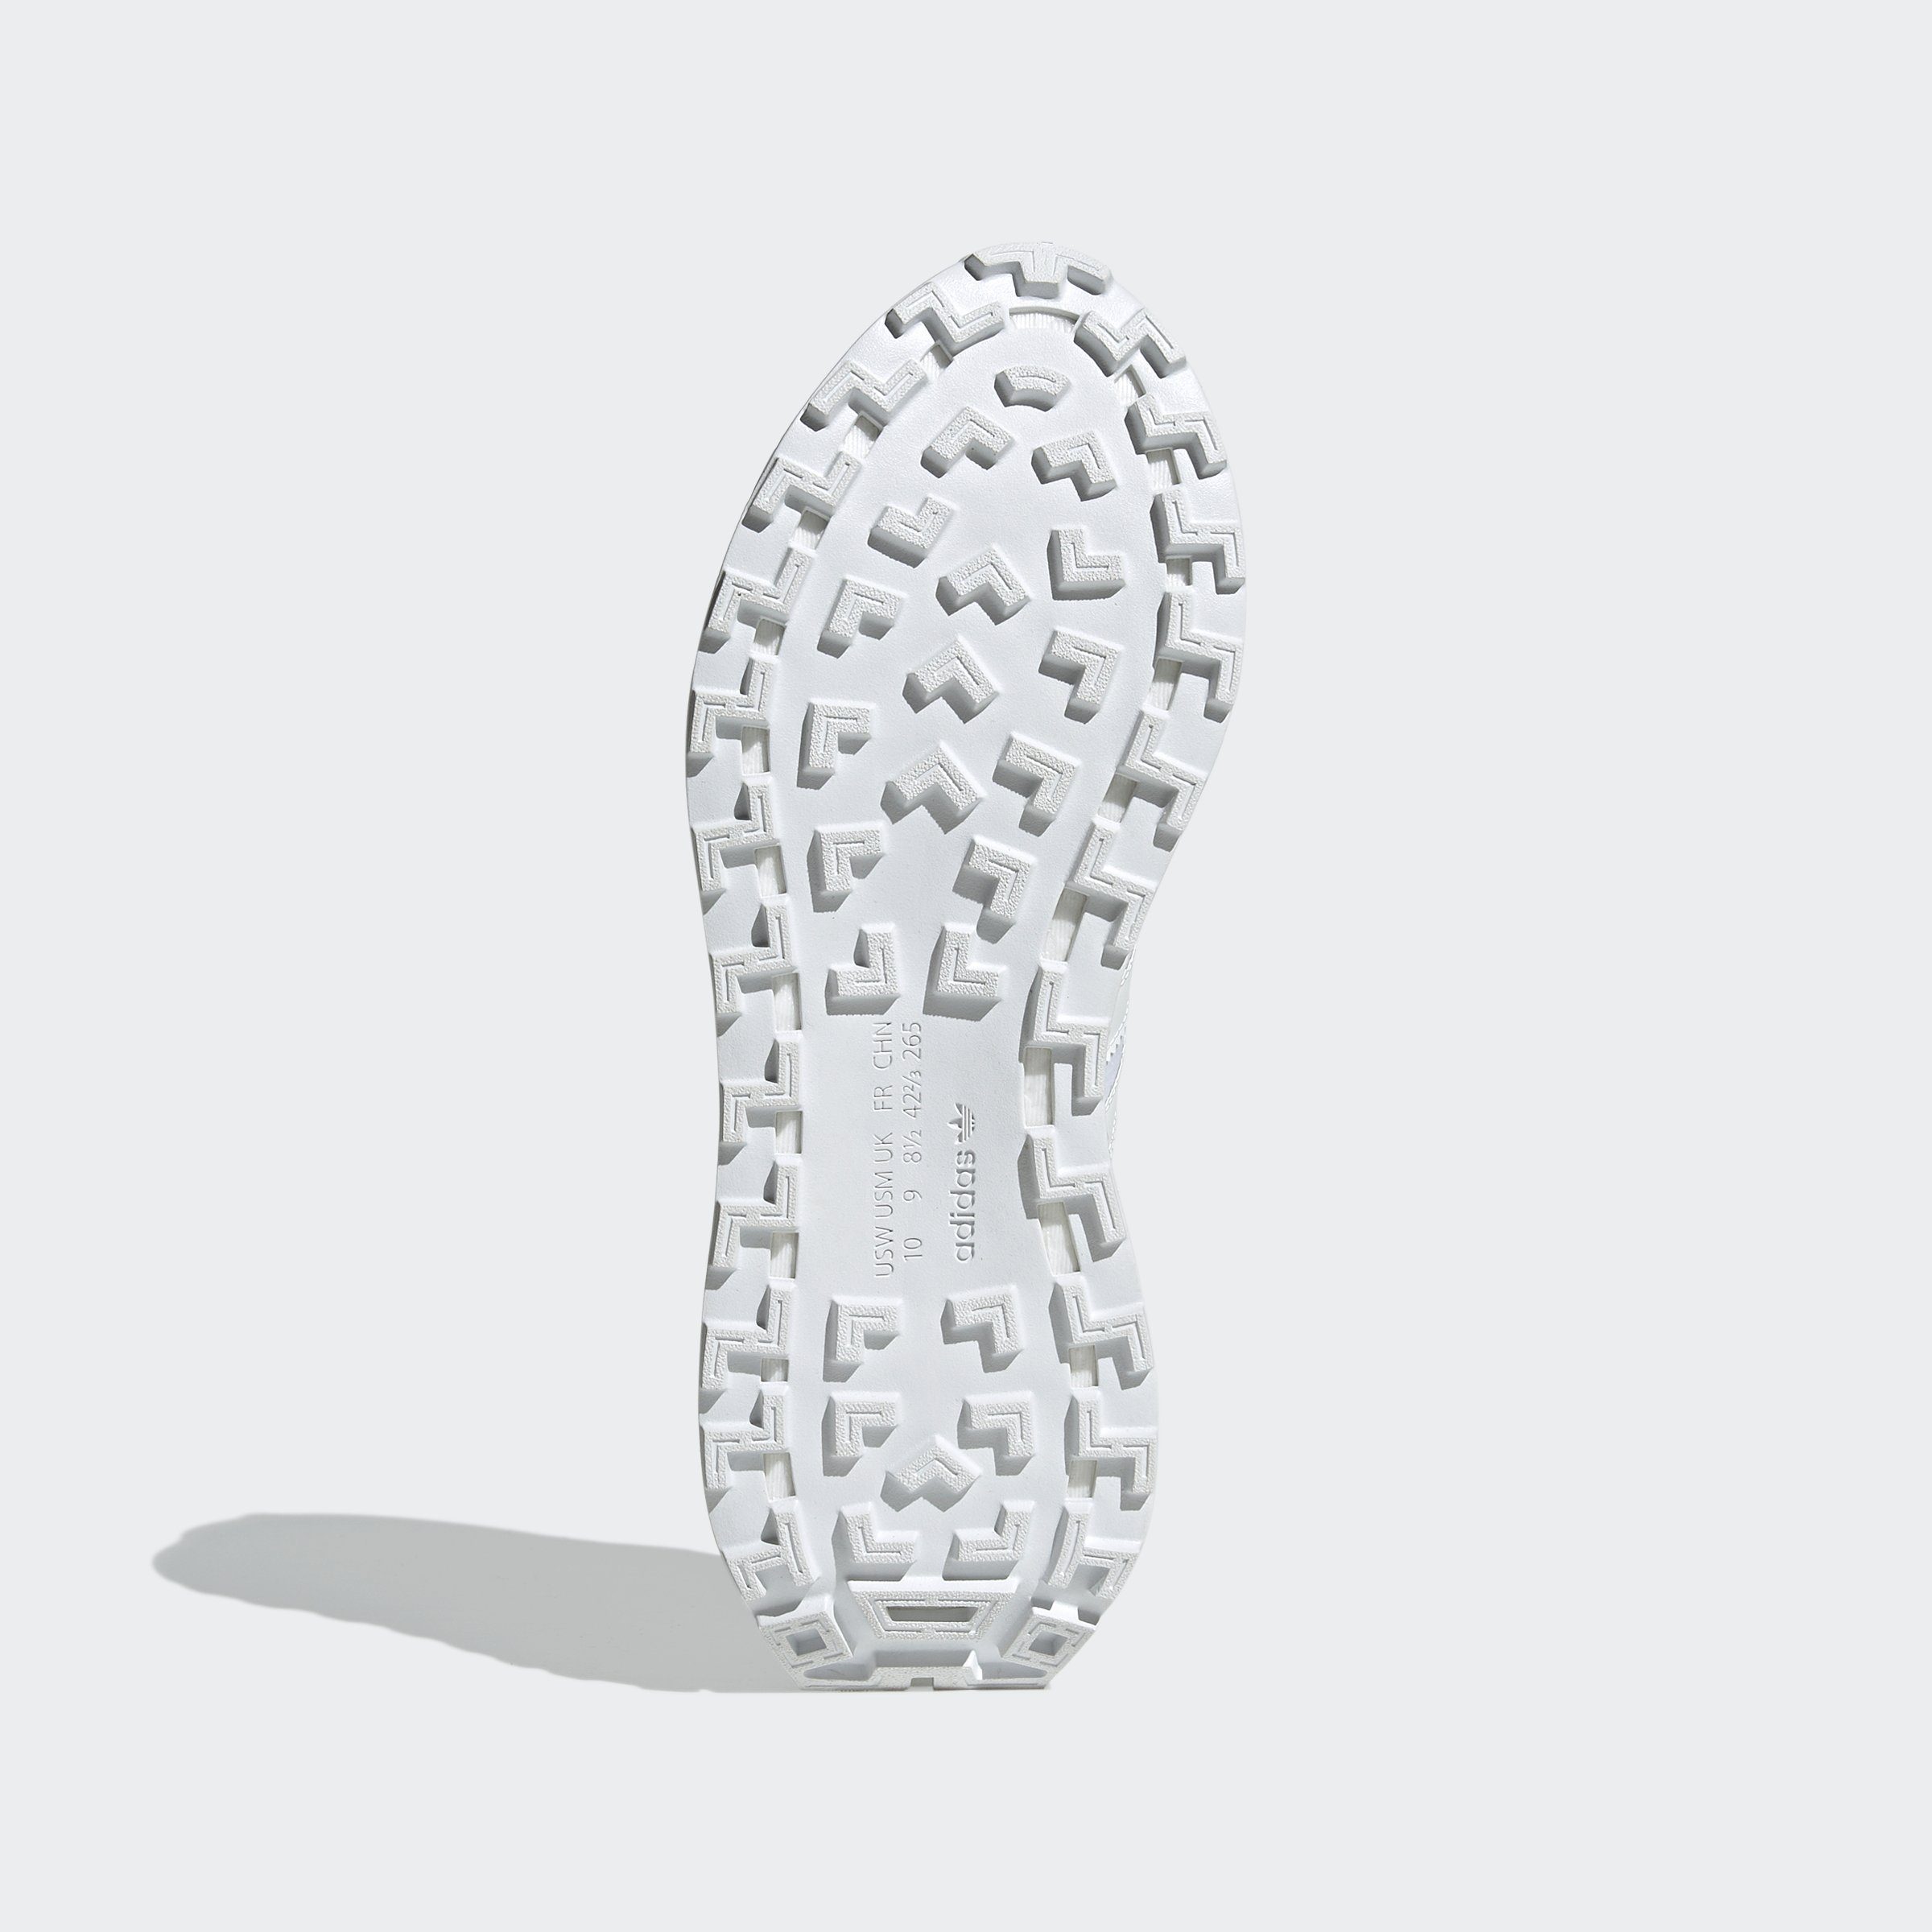 Cloud / White / RETROPY Originals Core White Crystal E5 adidas Sneaker White